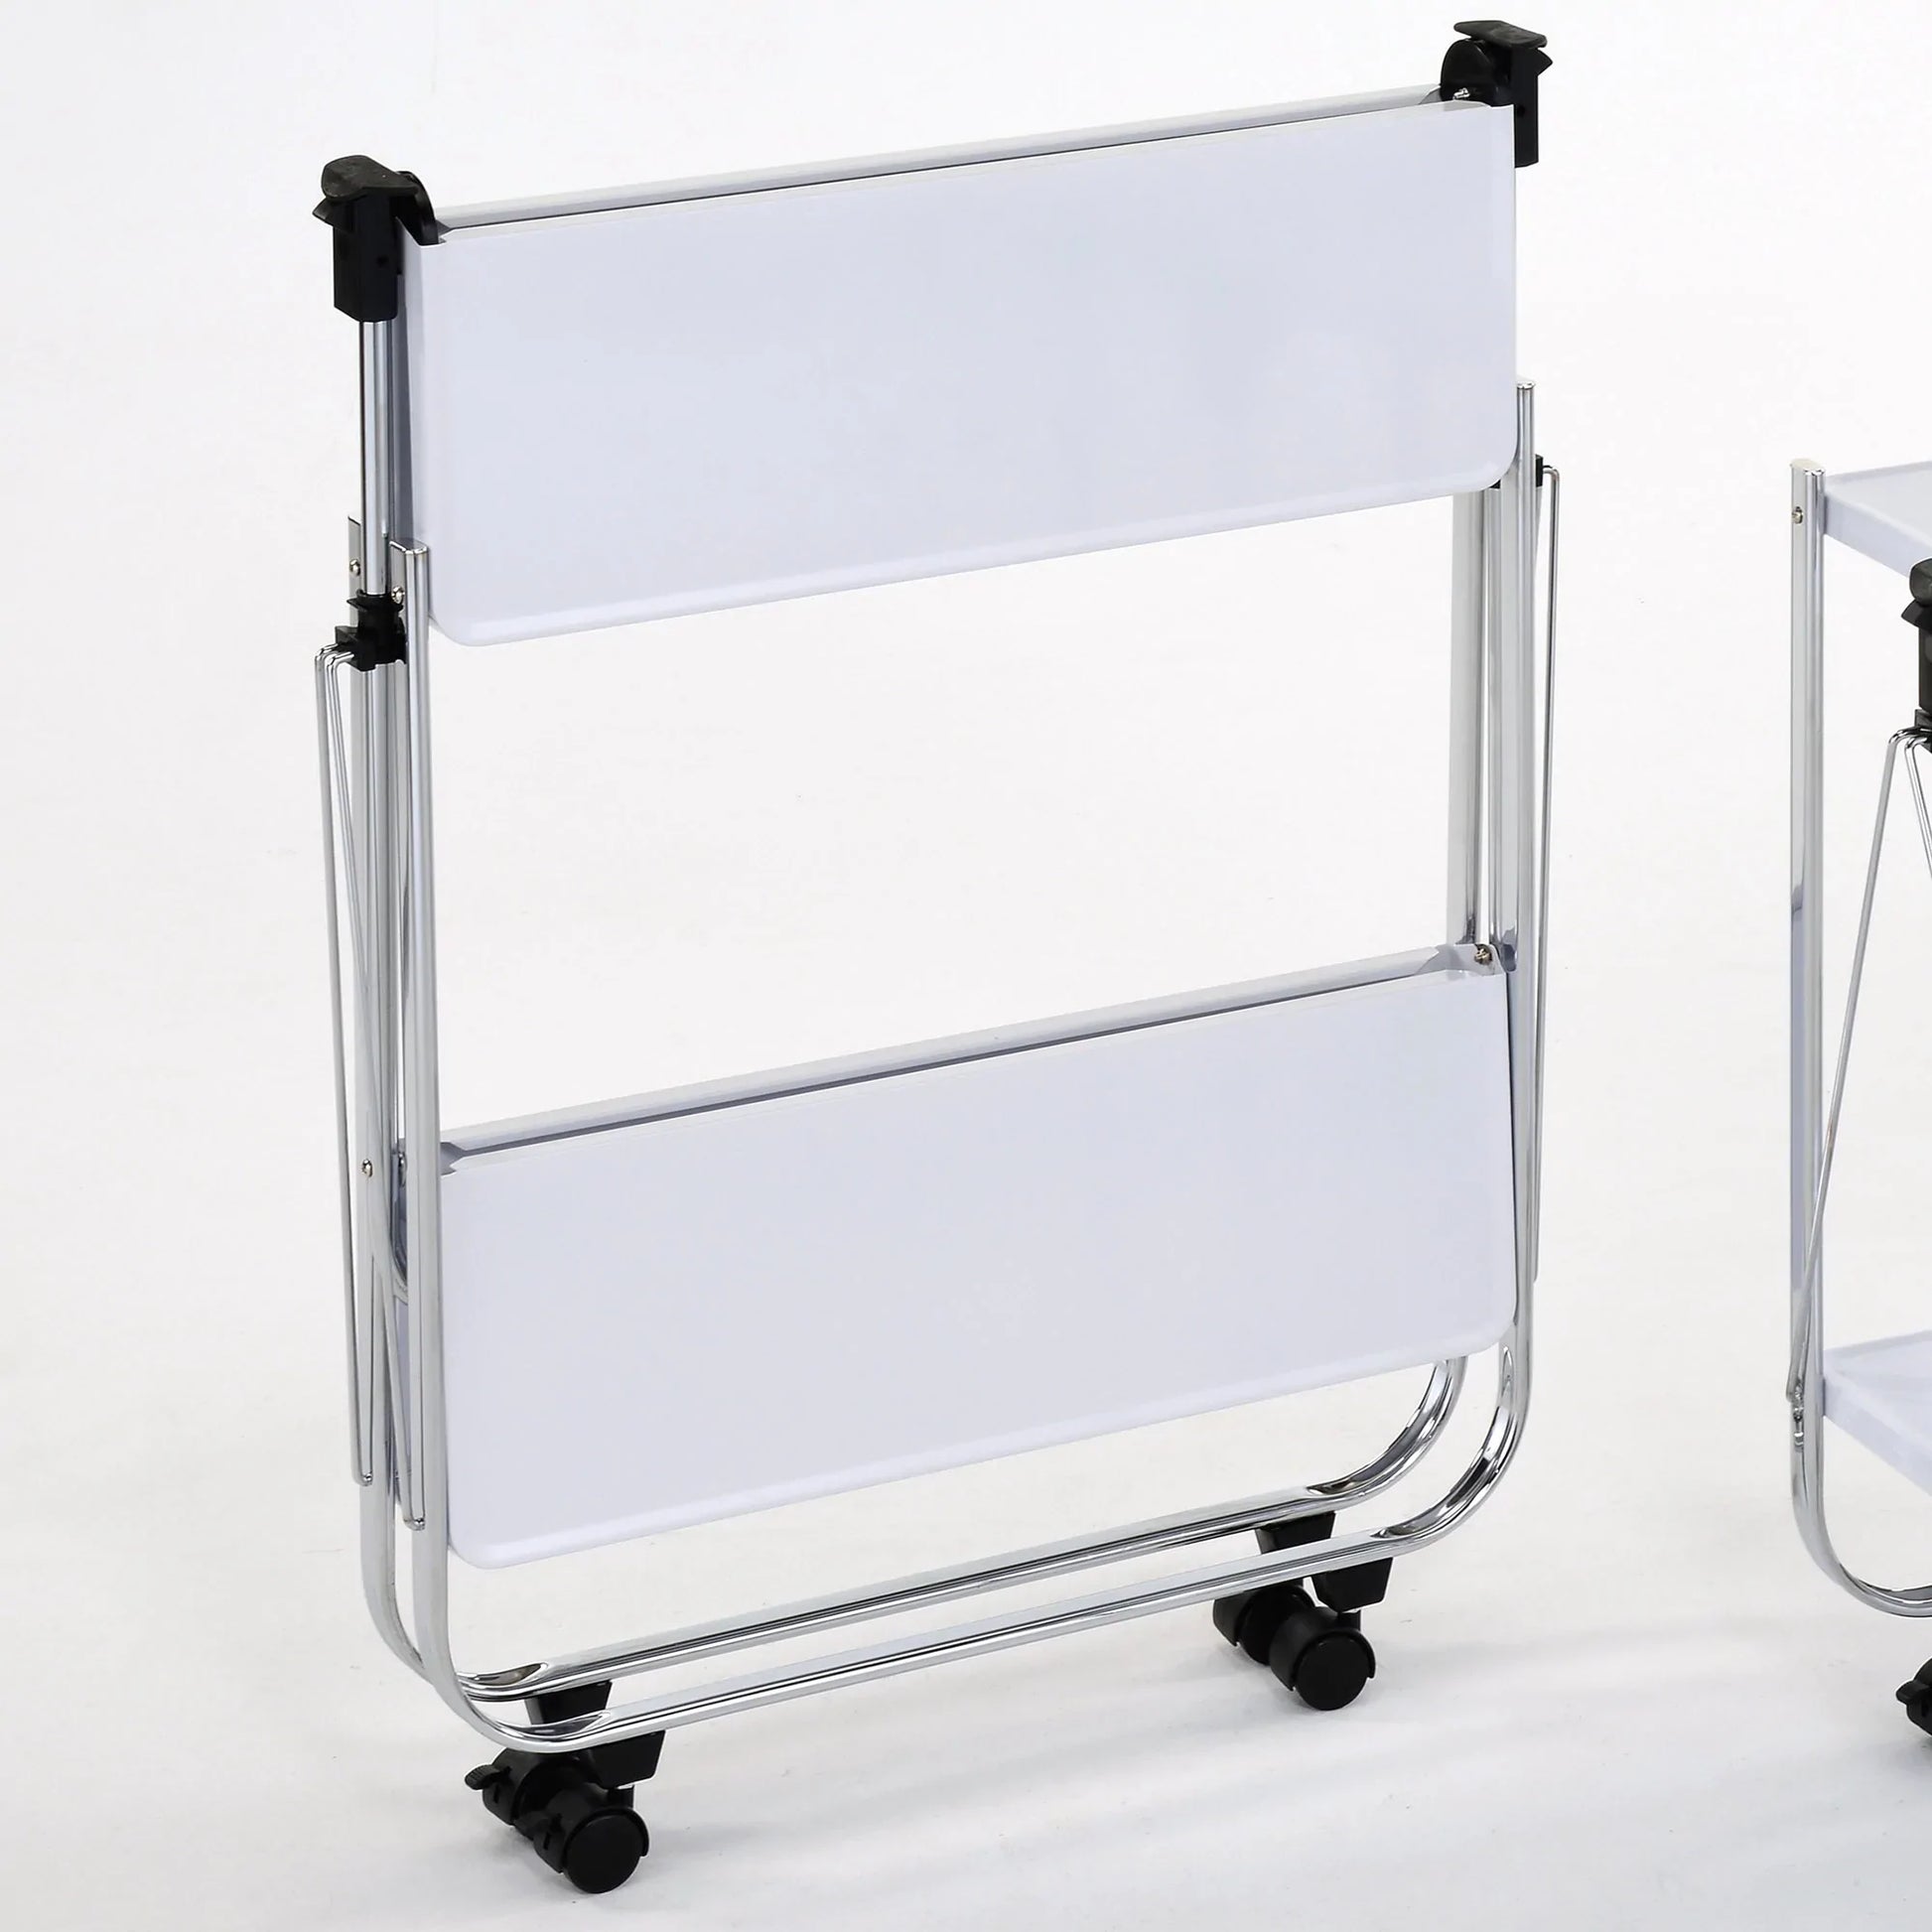 Sumi 2-Tier Bar Cart in White/Chrome - Furniture Depot